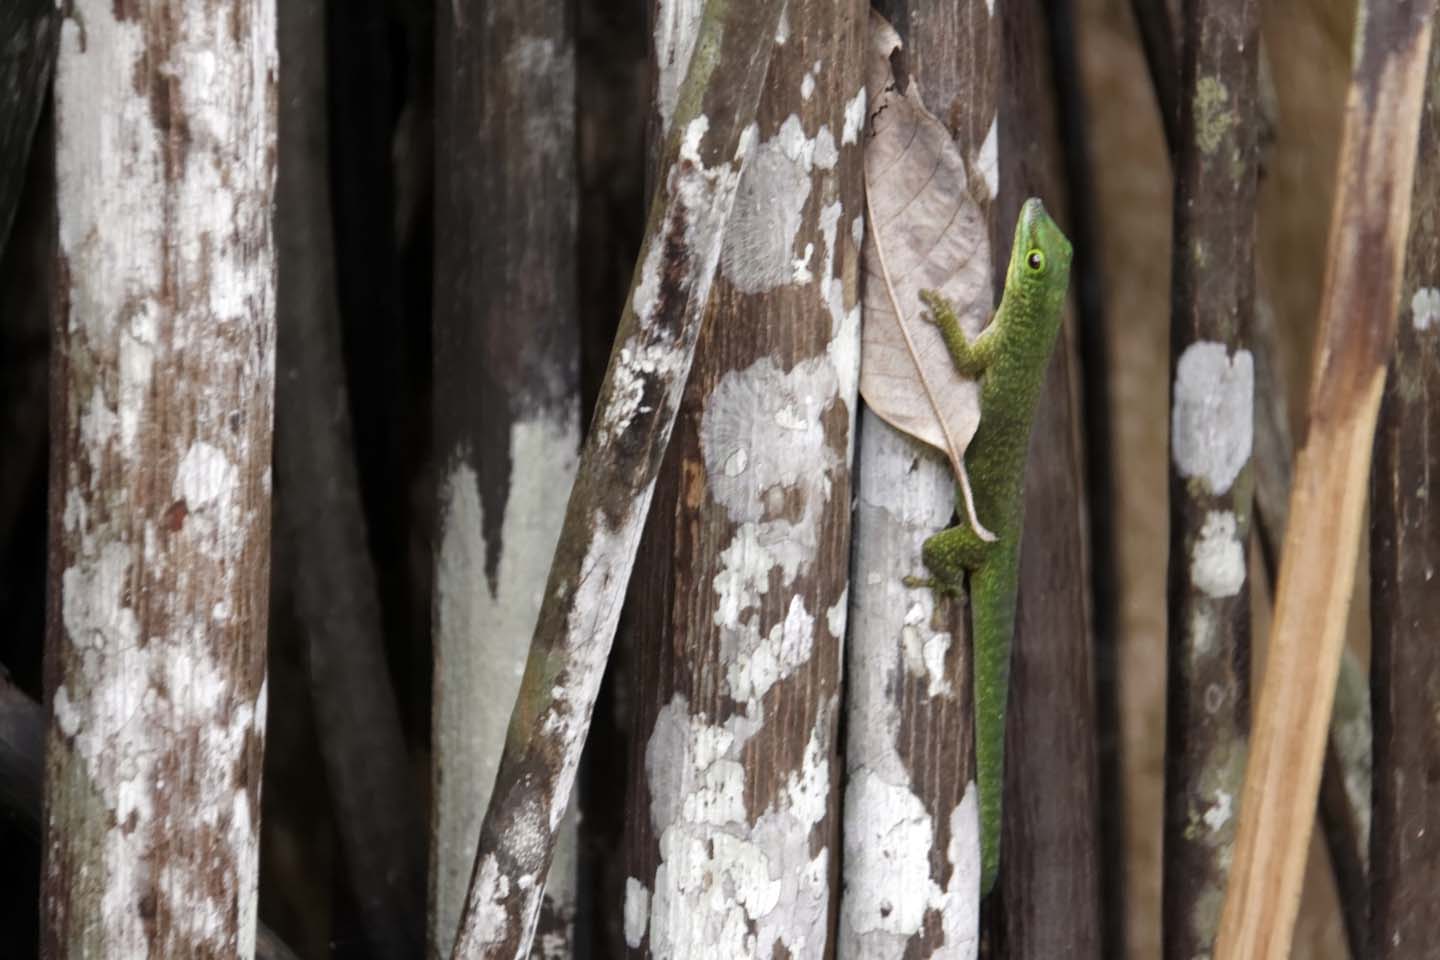 Bild 7: Taggecko im Vallée de Mai | Day Gecko